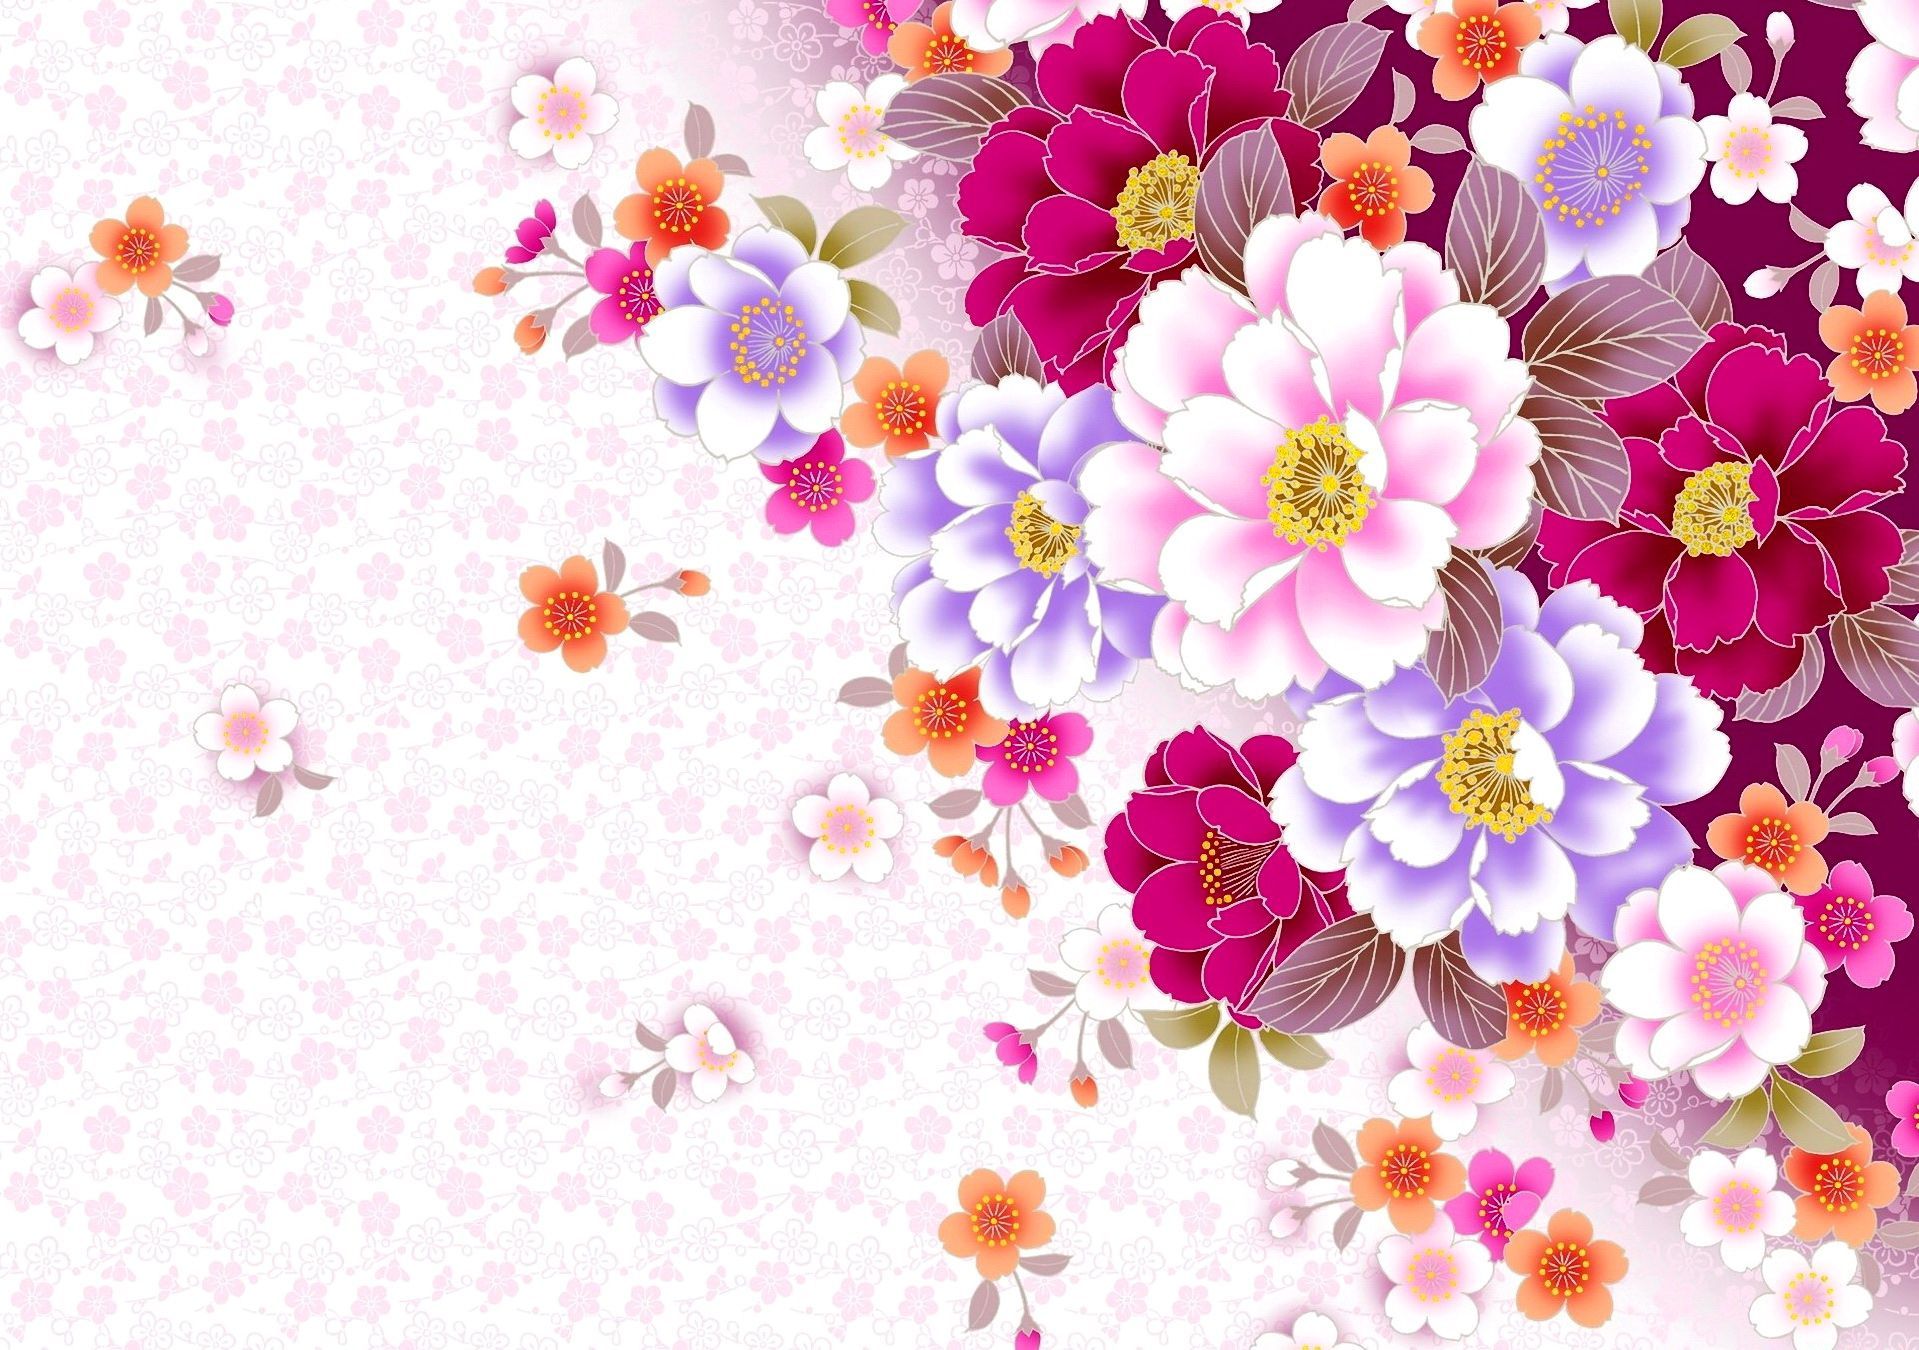 Wallpaper Background Flowers 06kb High